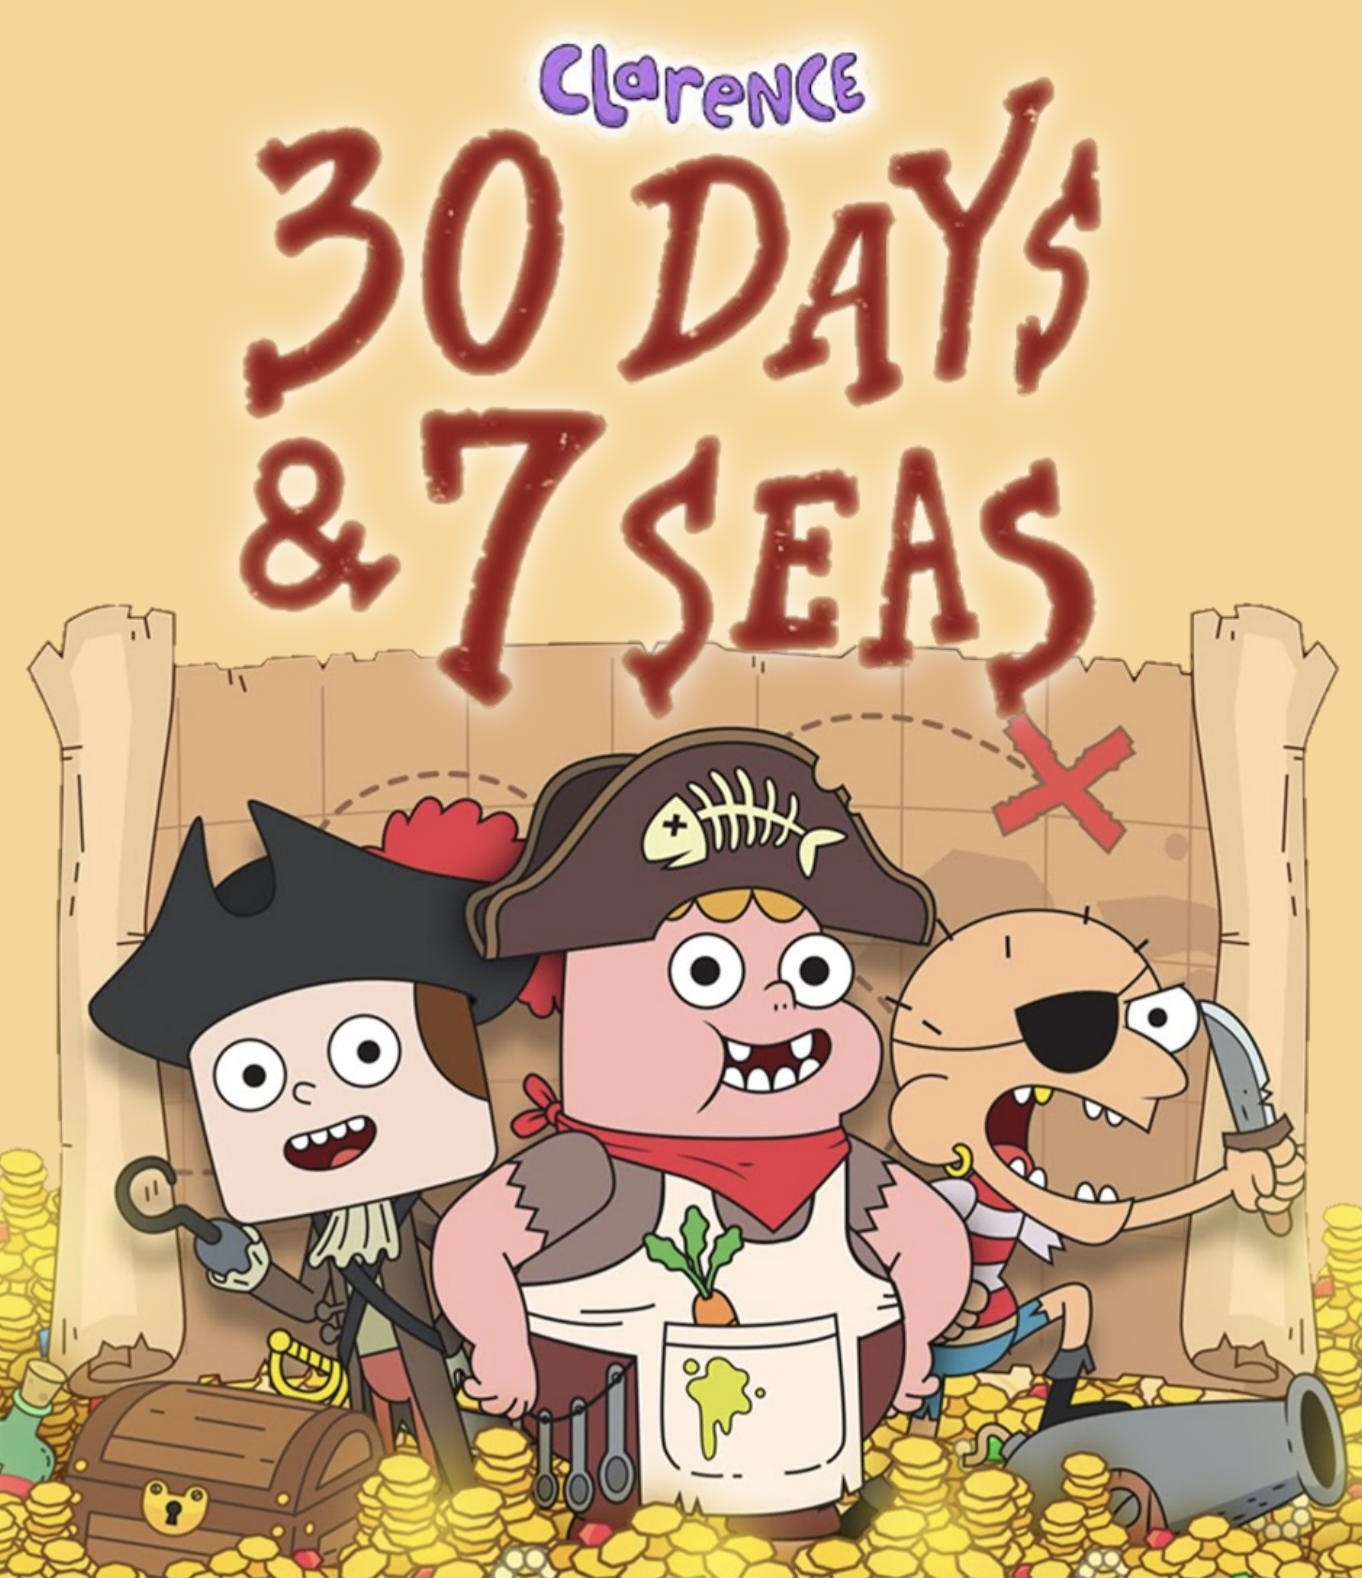 Clarence: 30 Days & 7 Seas